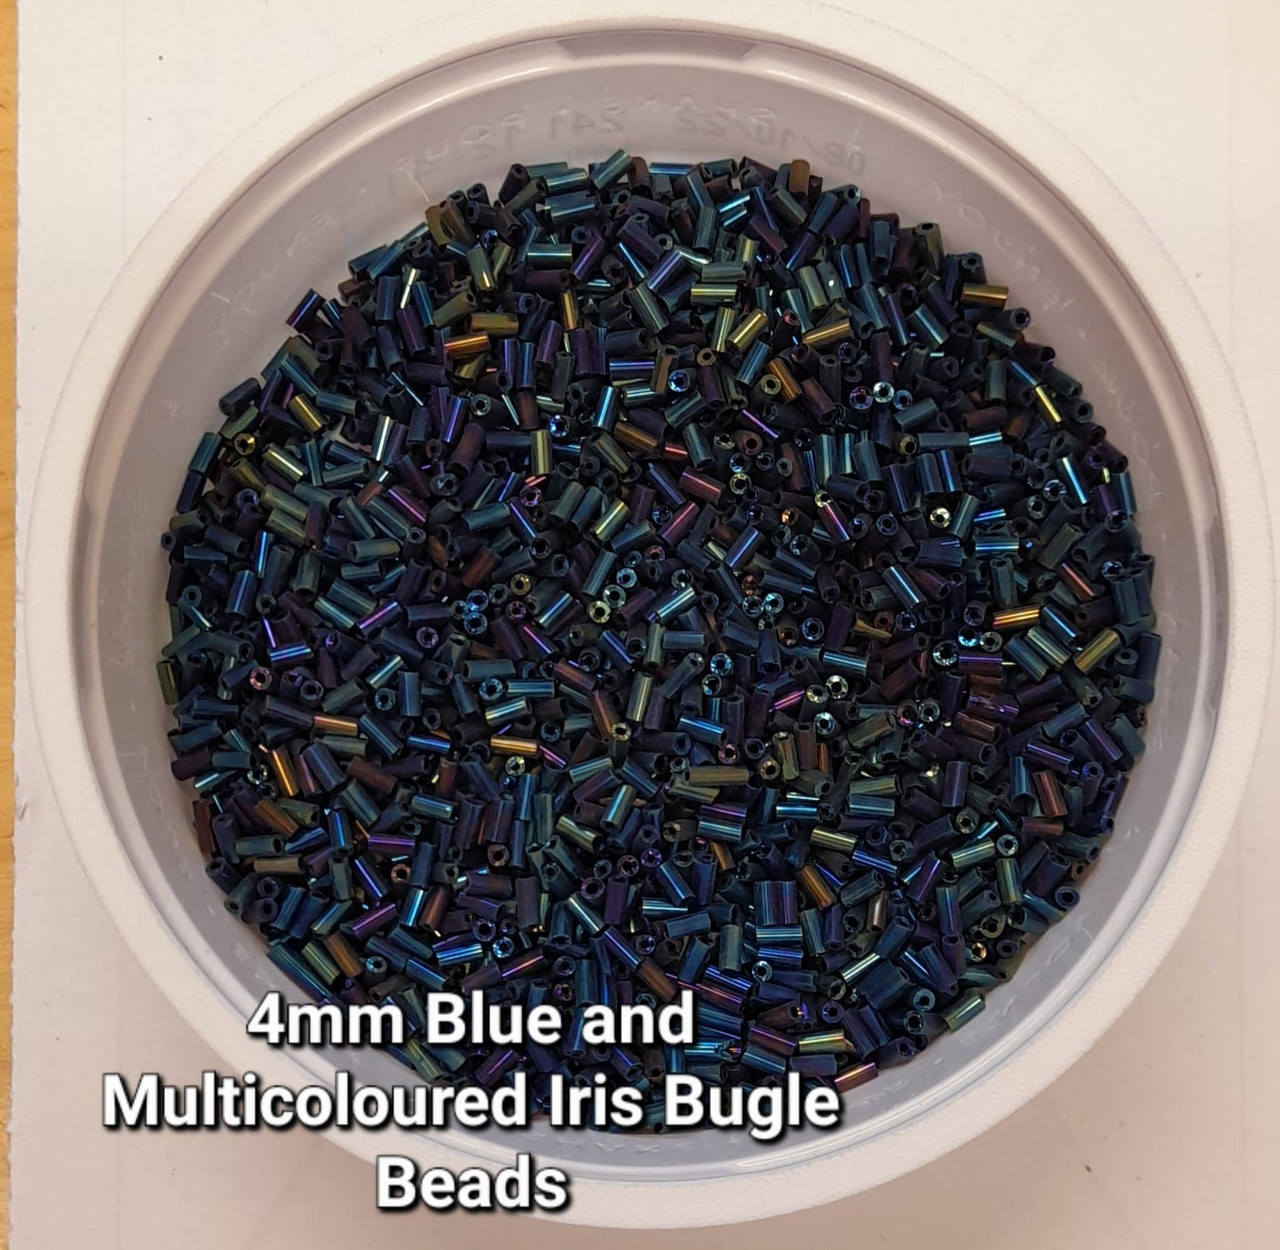 50g glass bugle beads - Blue & Multicolour Iris - approx 4mm